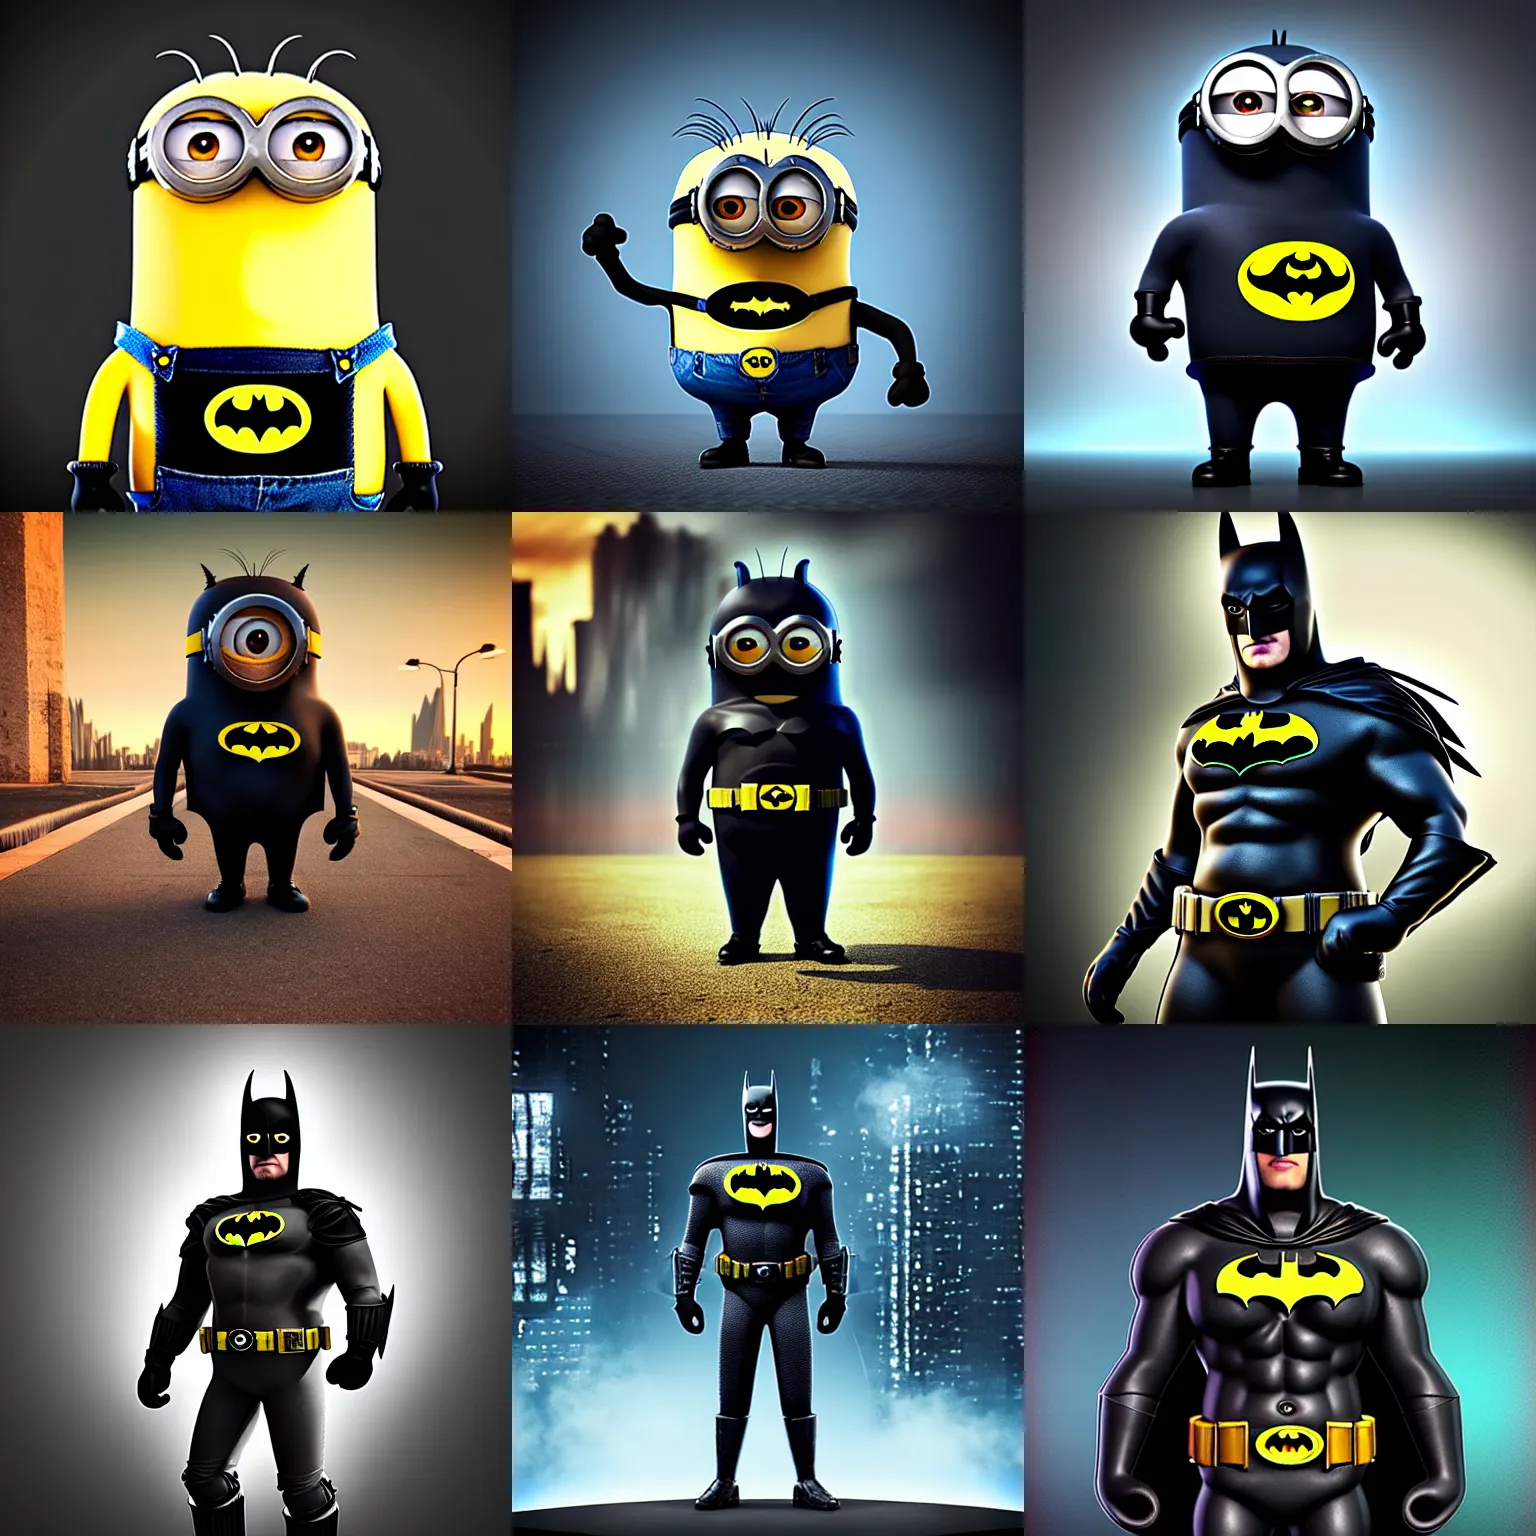 Image similar to “minion batman, full body, UHD, hyperrealistic render, 4k, cyberpunk”